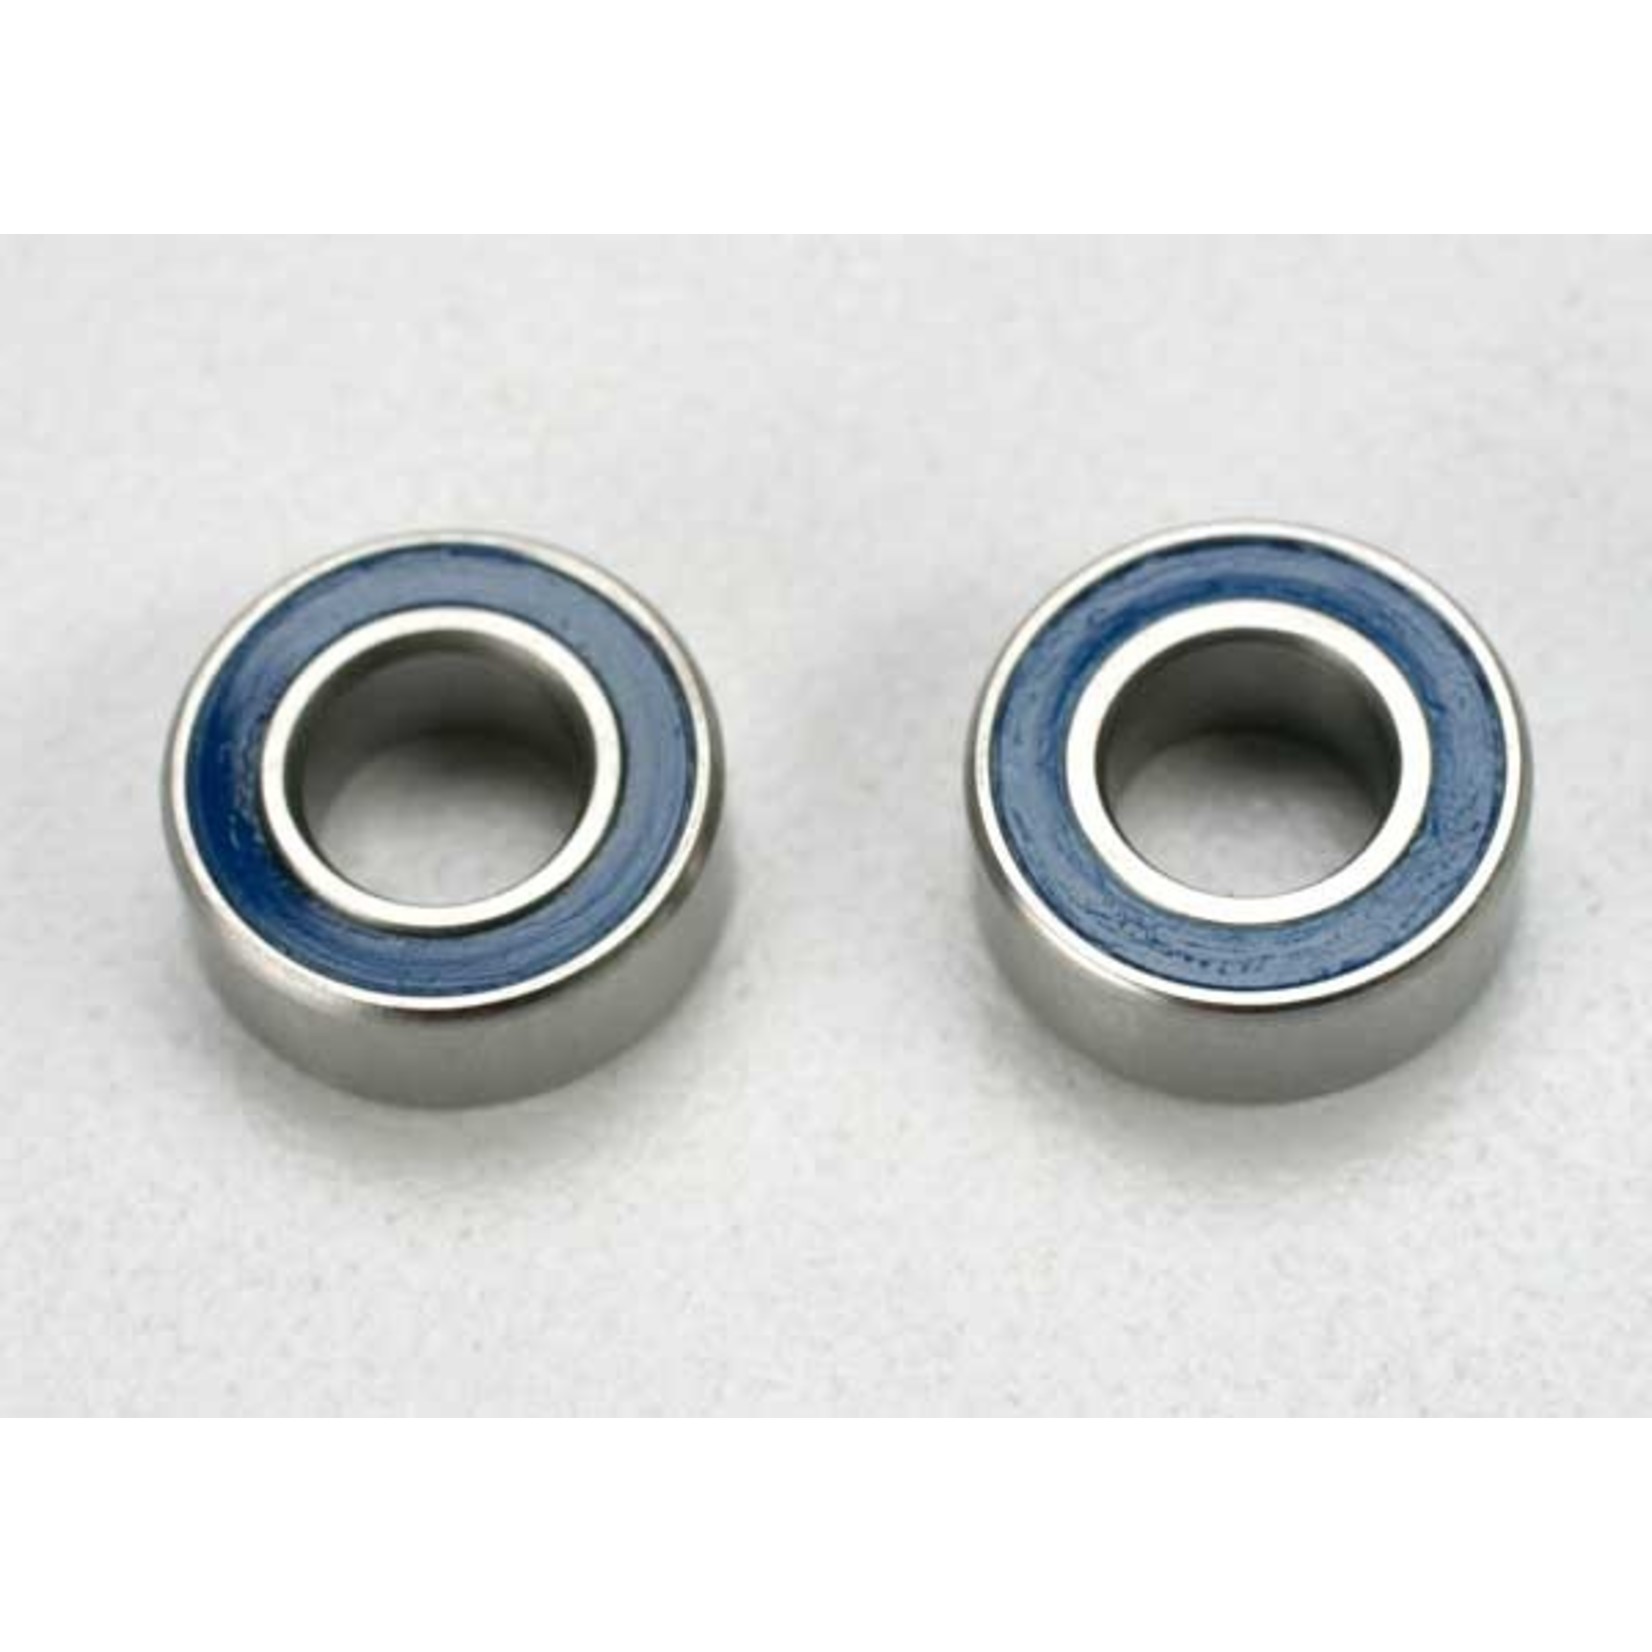 Traxxas 5115 - Ball bearings, blue rubber shield (5x10x4mm